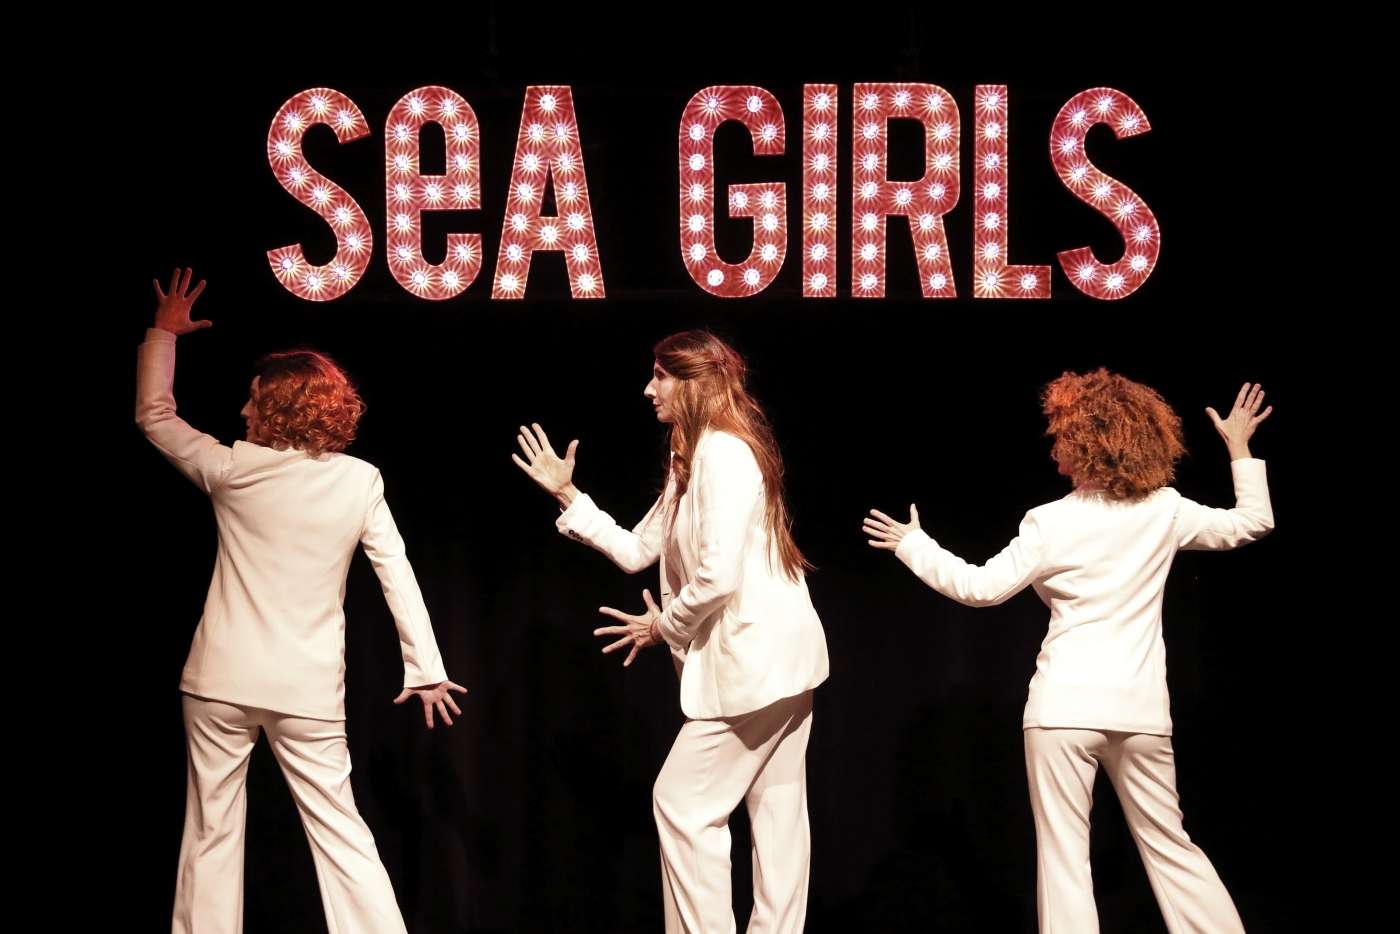 Les Sea Girls 4